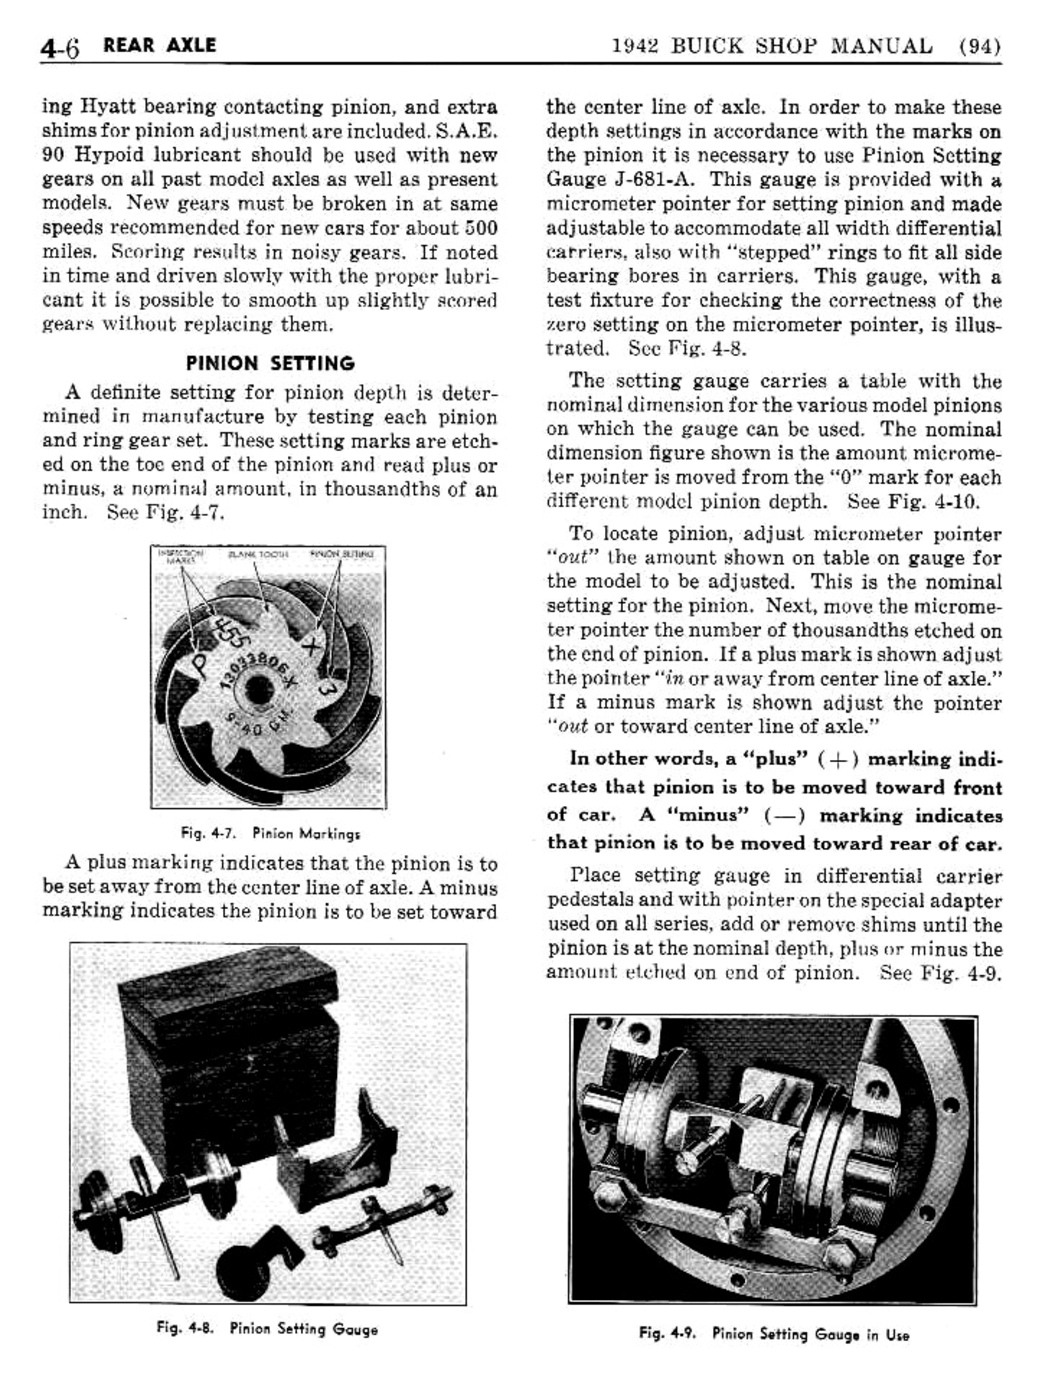 n_05 1942 Buick Shop Manual - Rear Axle-006-006.jpg